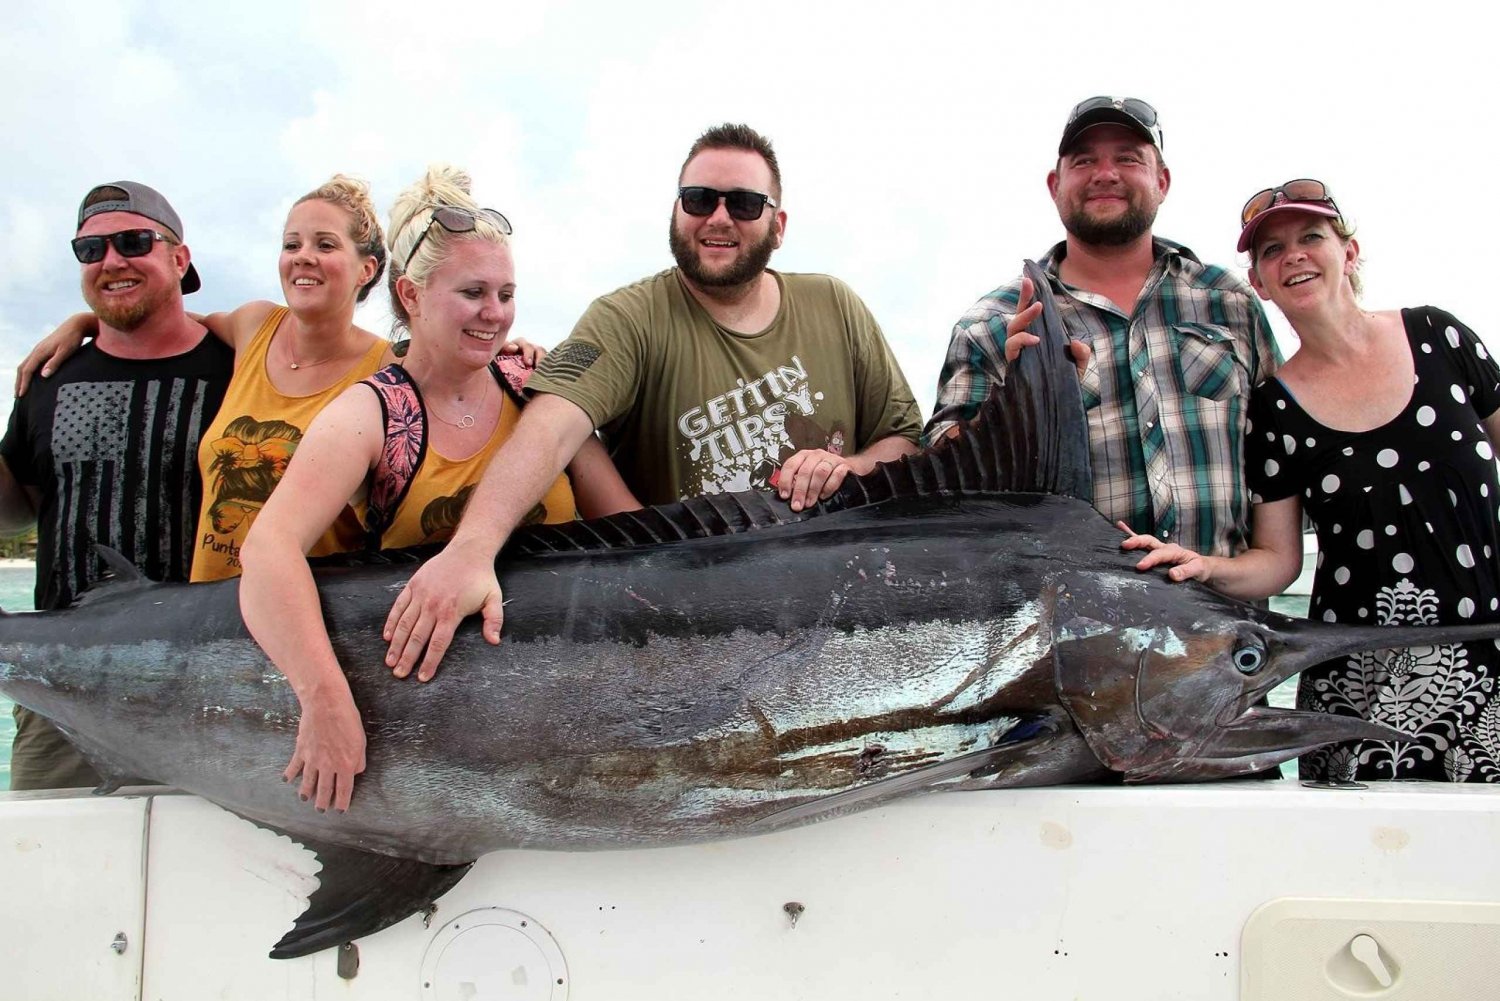 Punta Cana offshore private fishing charter 'Sherlock' 39 '